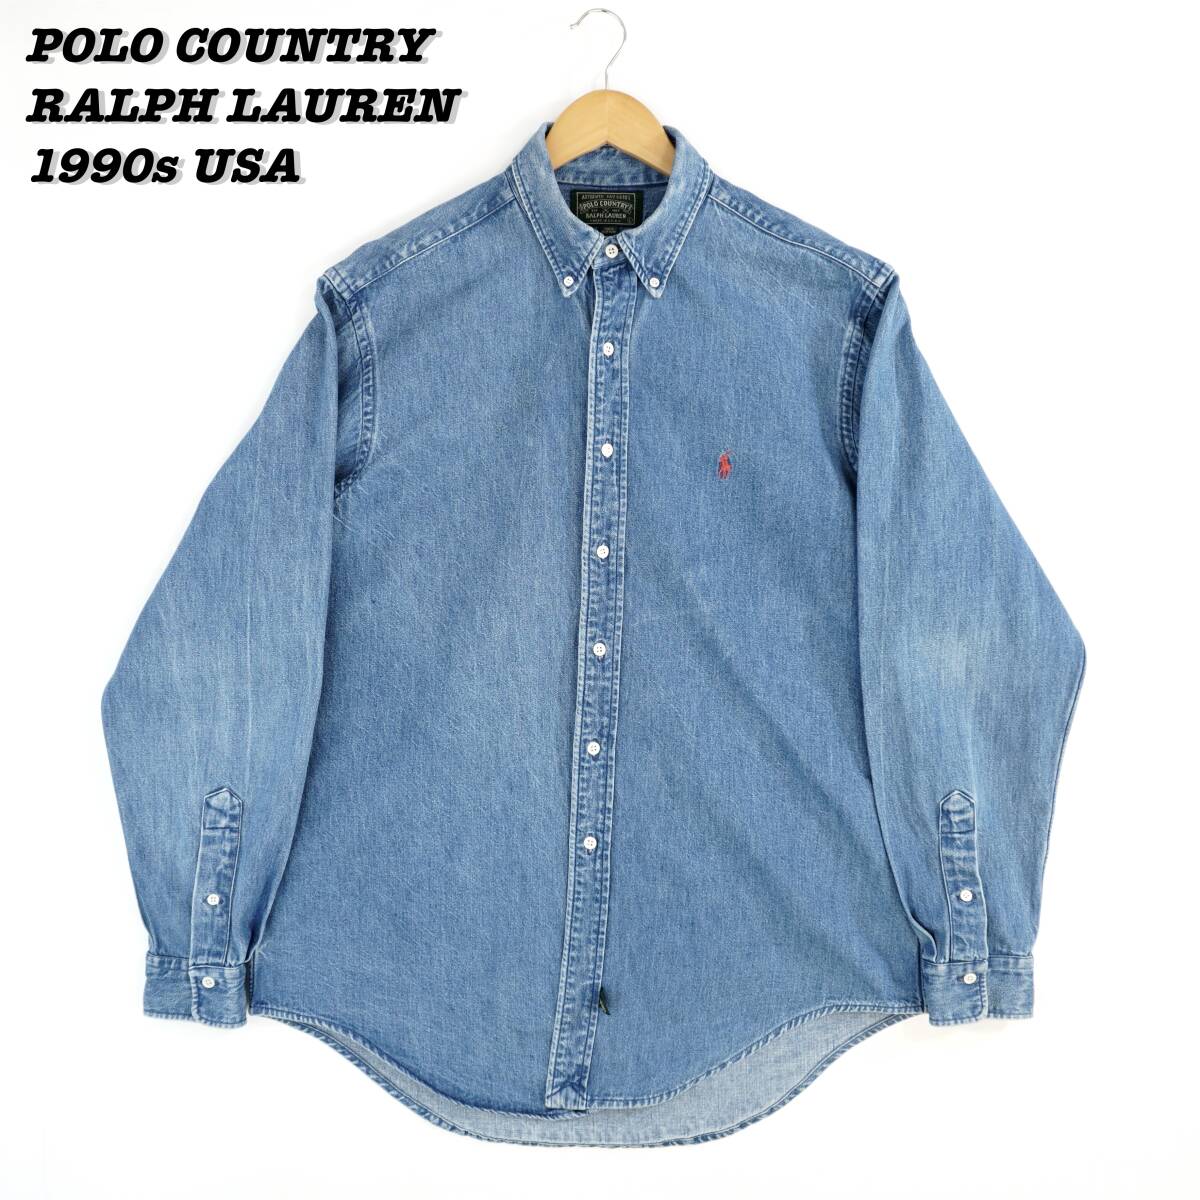 POLO COUNTRY RALPH LAUREN Denim Shirts L 1990s USA SH24020 ポロカントリー ラルフローレン デニムシャツ 1989年 1990年代 アメリカ製